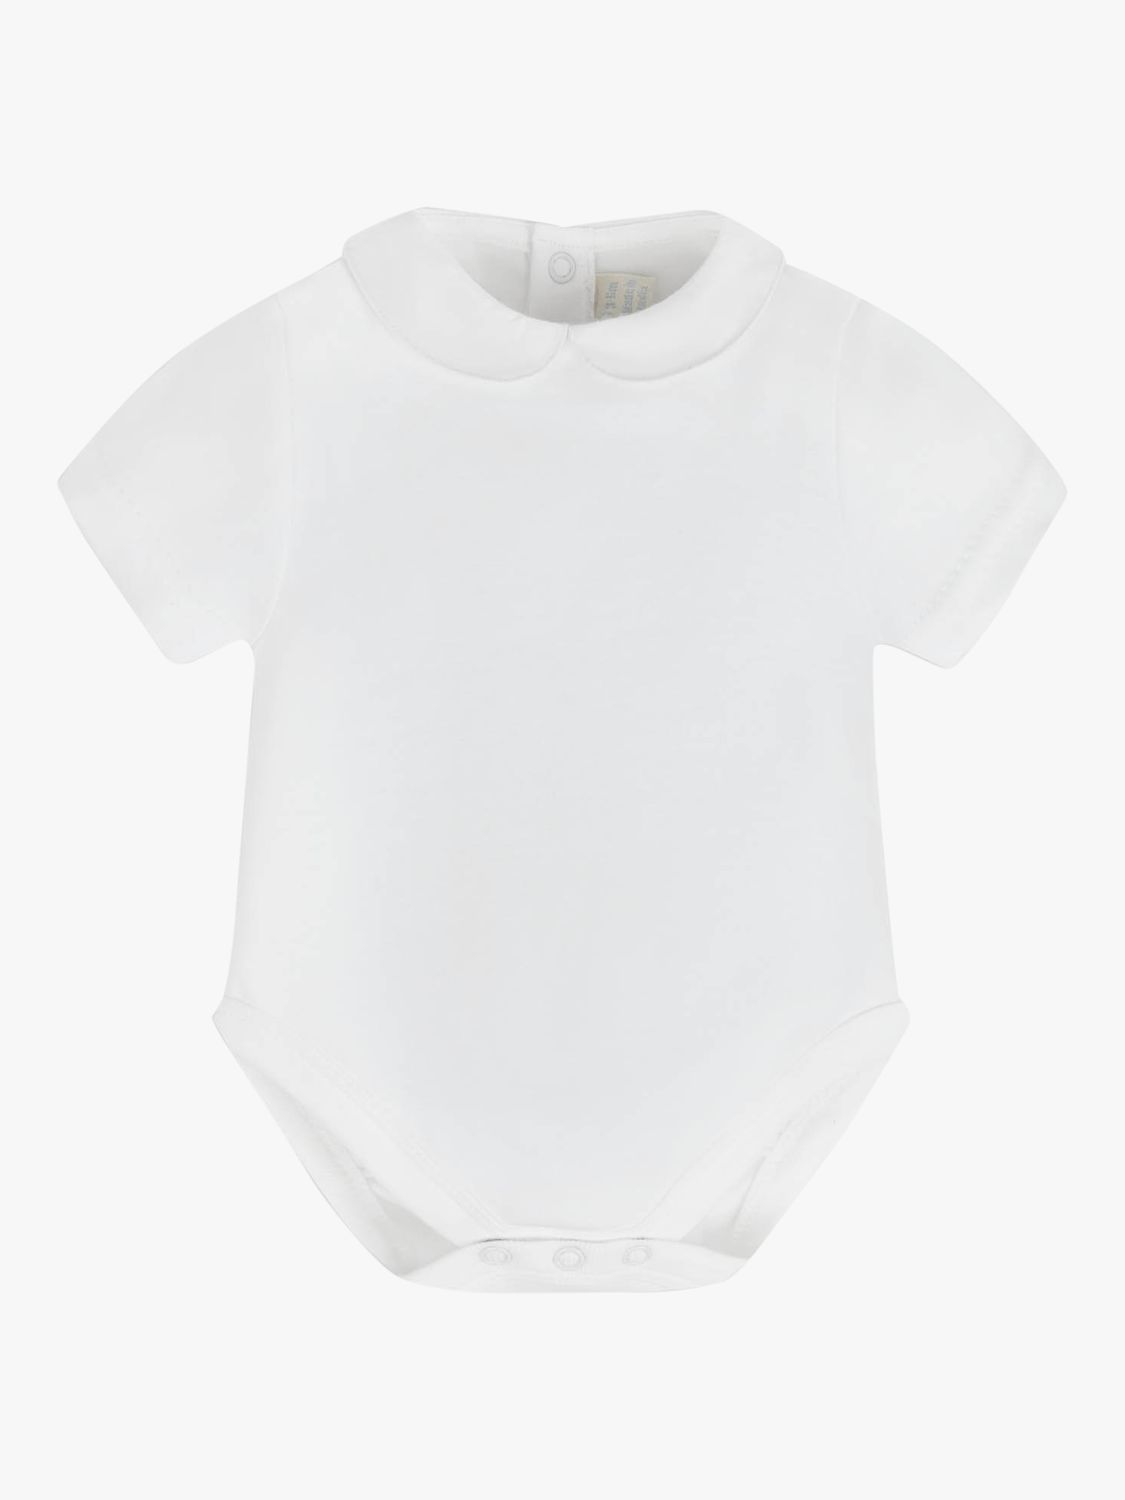 Buy JoJo Maman Bébé Baby Smocked Short Dungarees & Collar Bodysuit Set, Blue/Multi Online at johnlewis.com